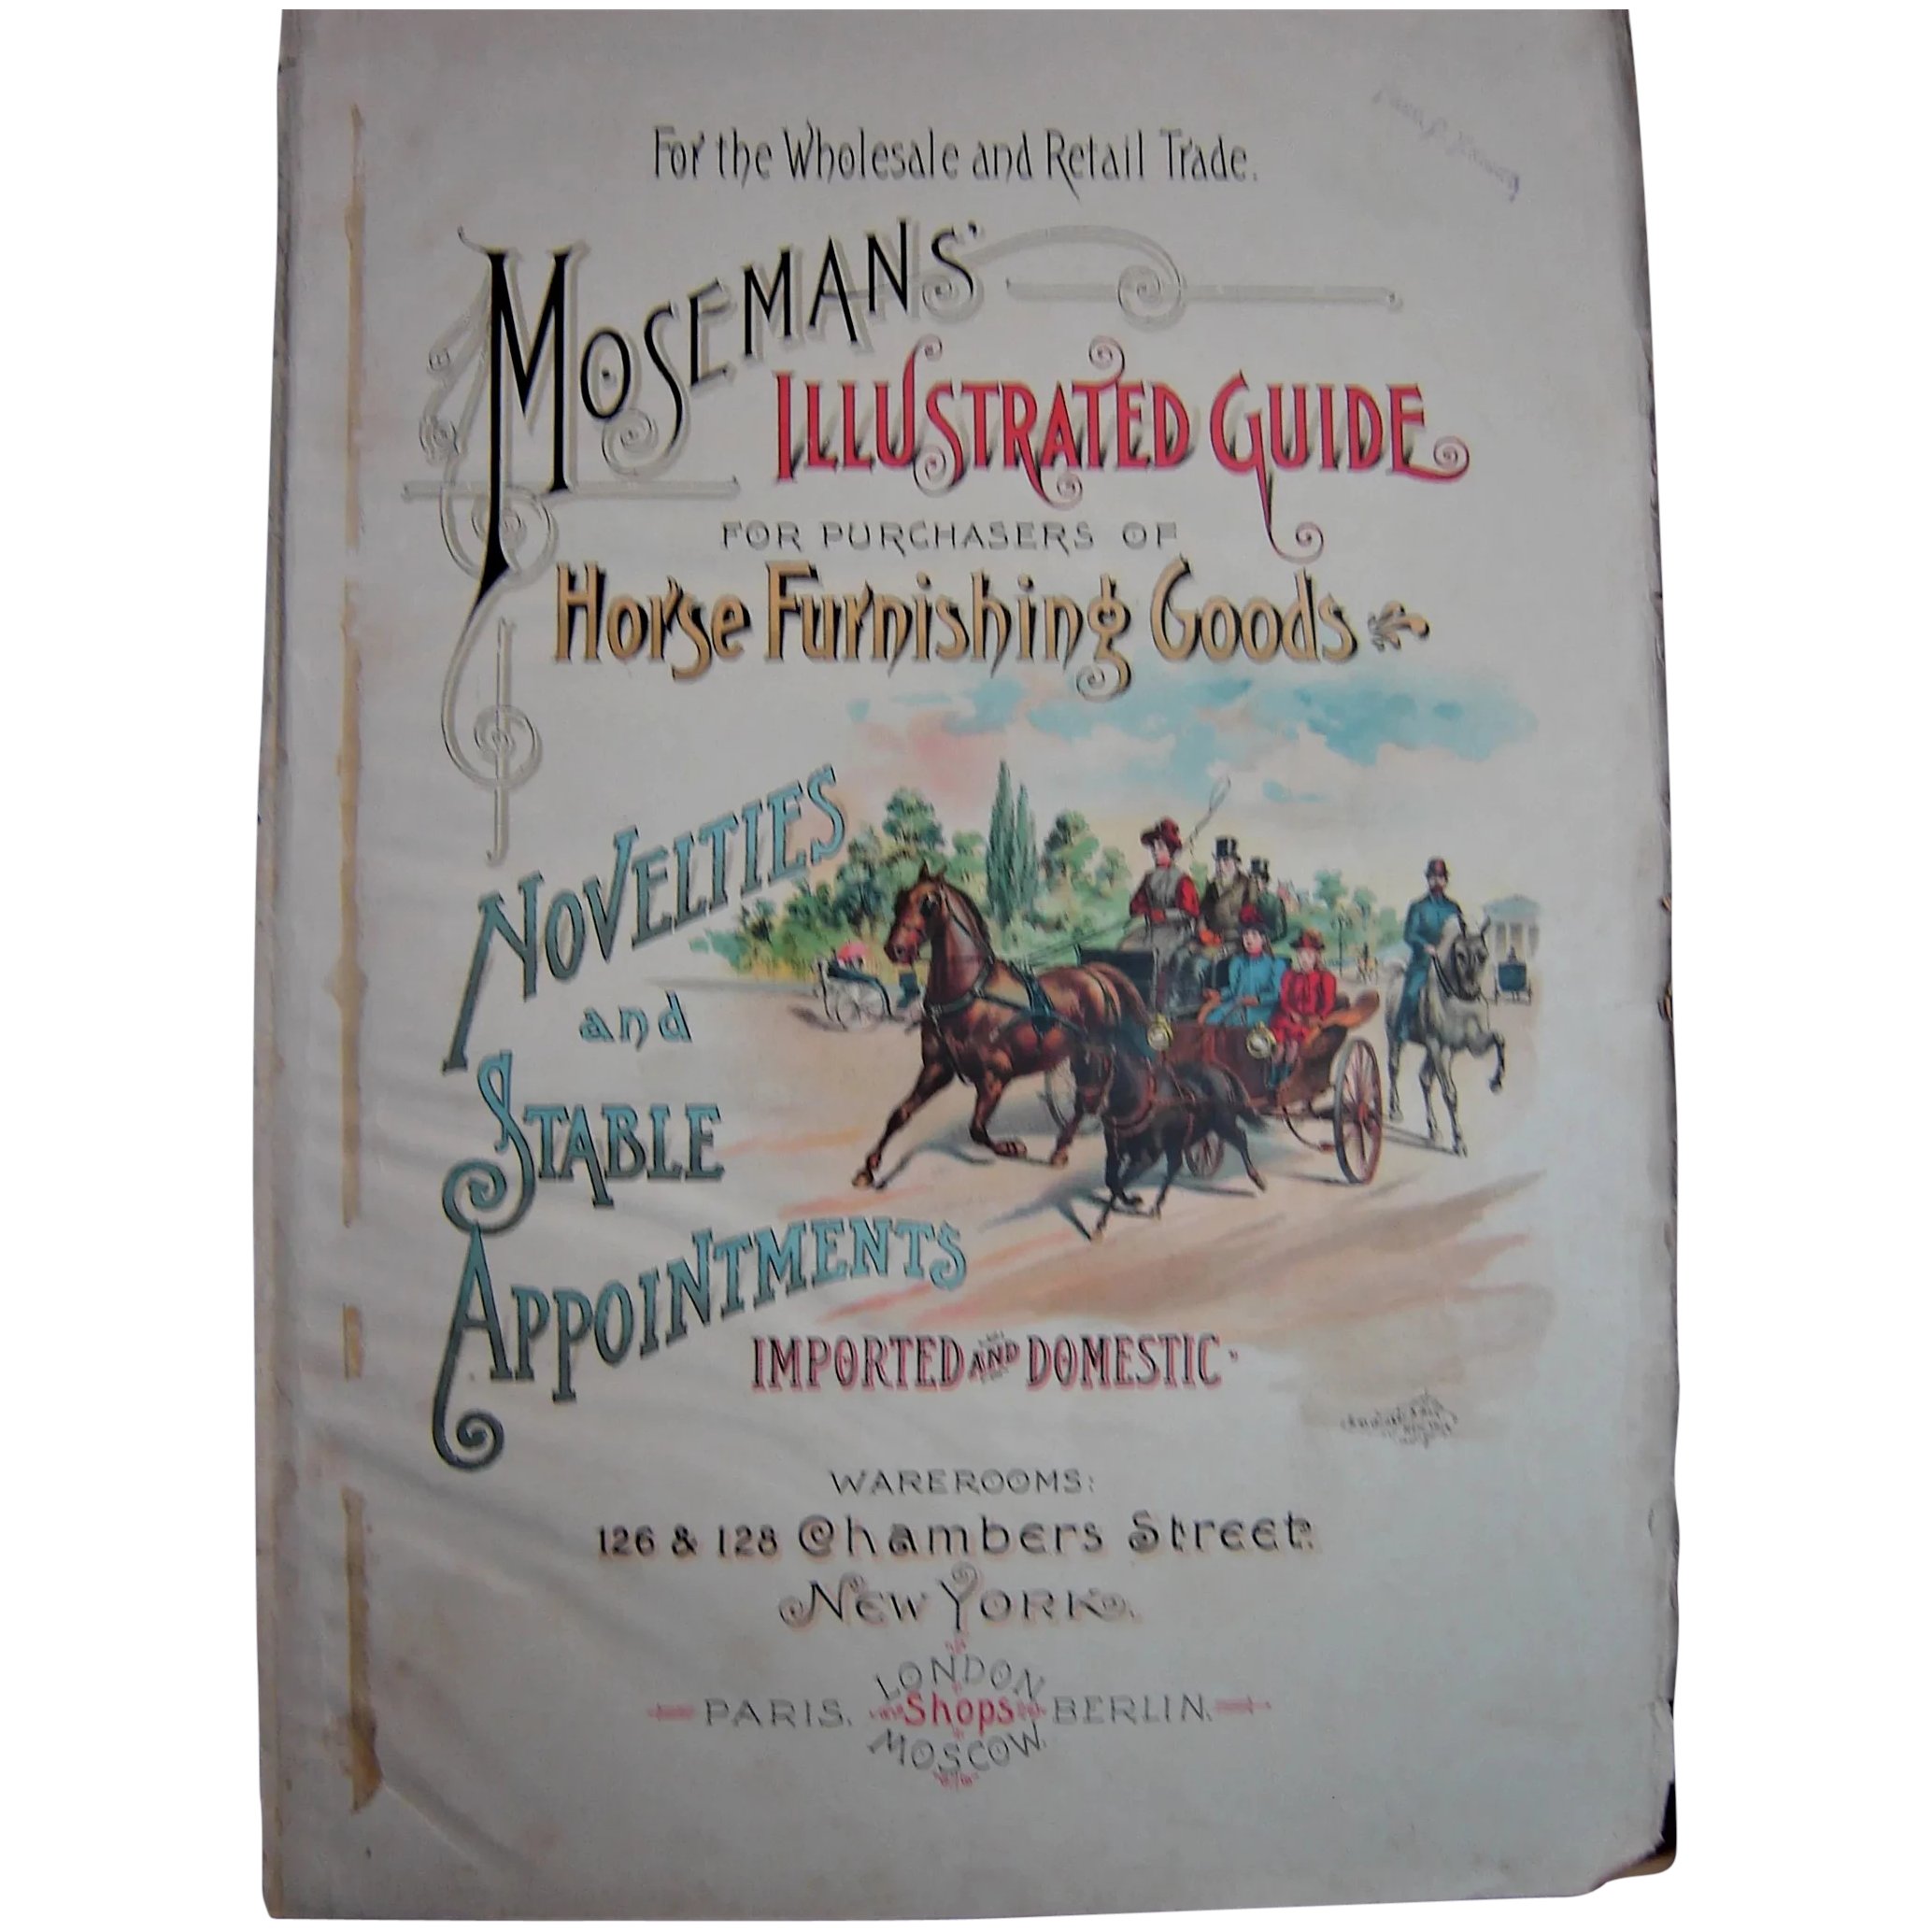 MOSEMAN'S Original Illustrated Guide HEADER Page - Circa 1892